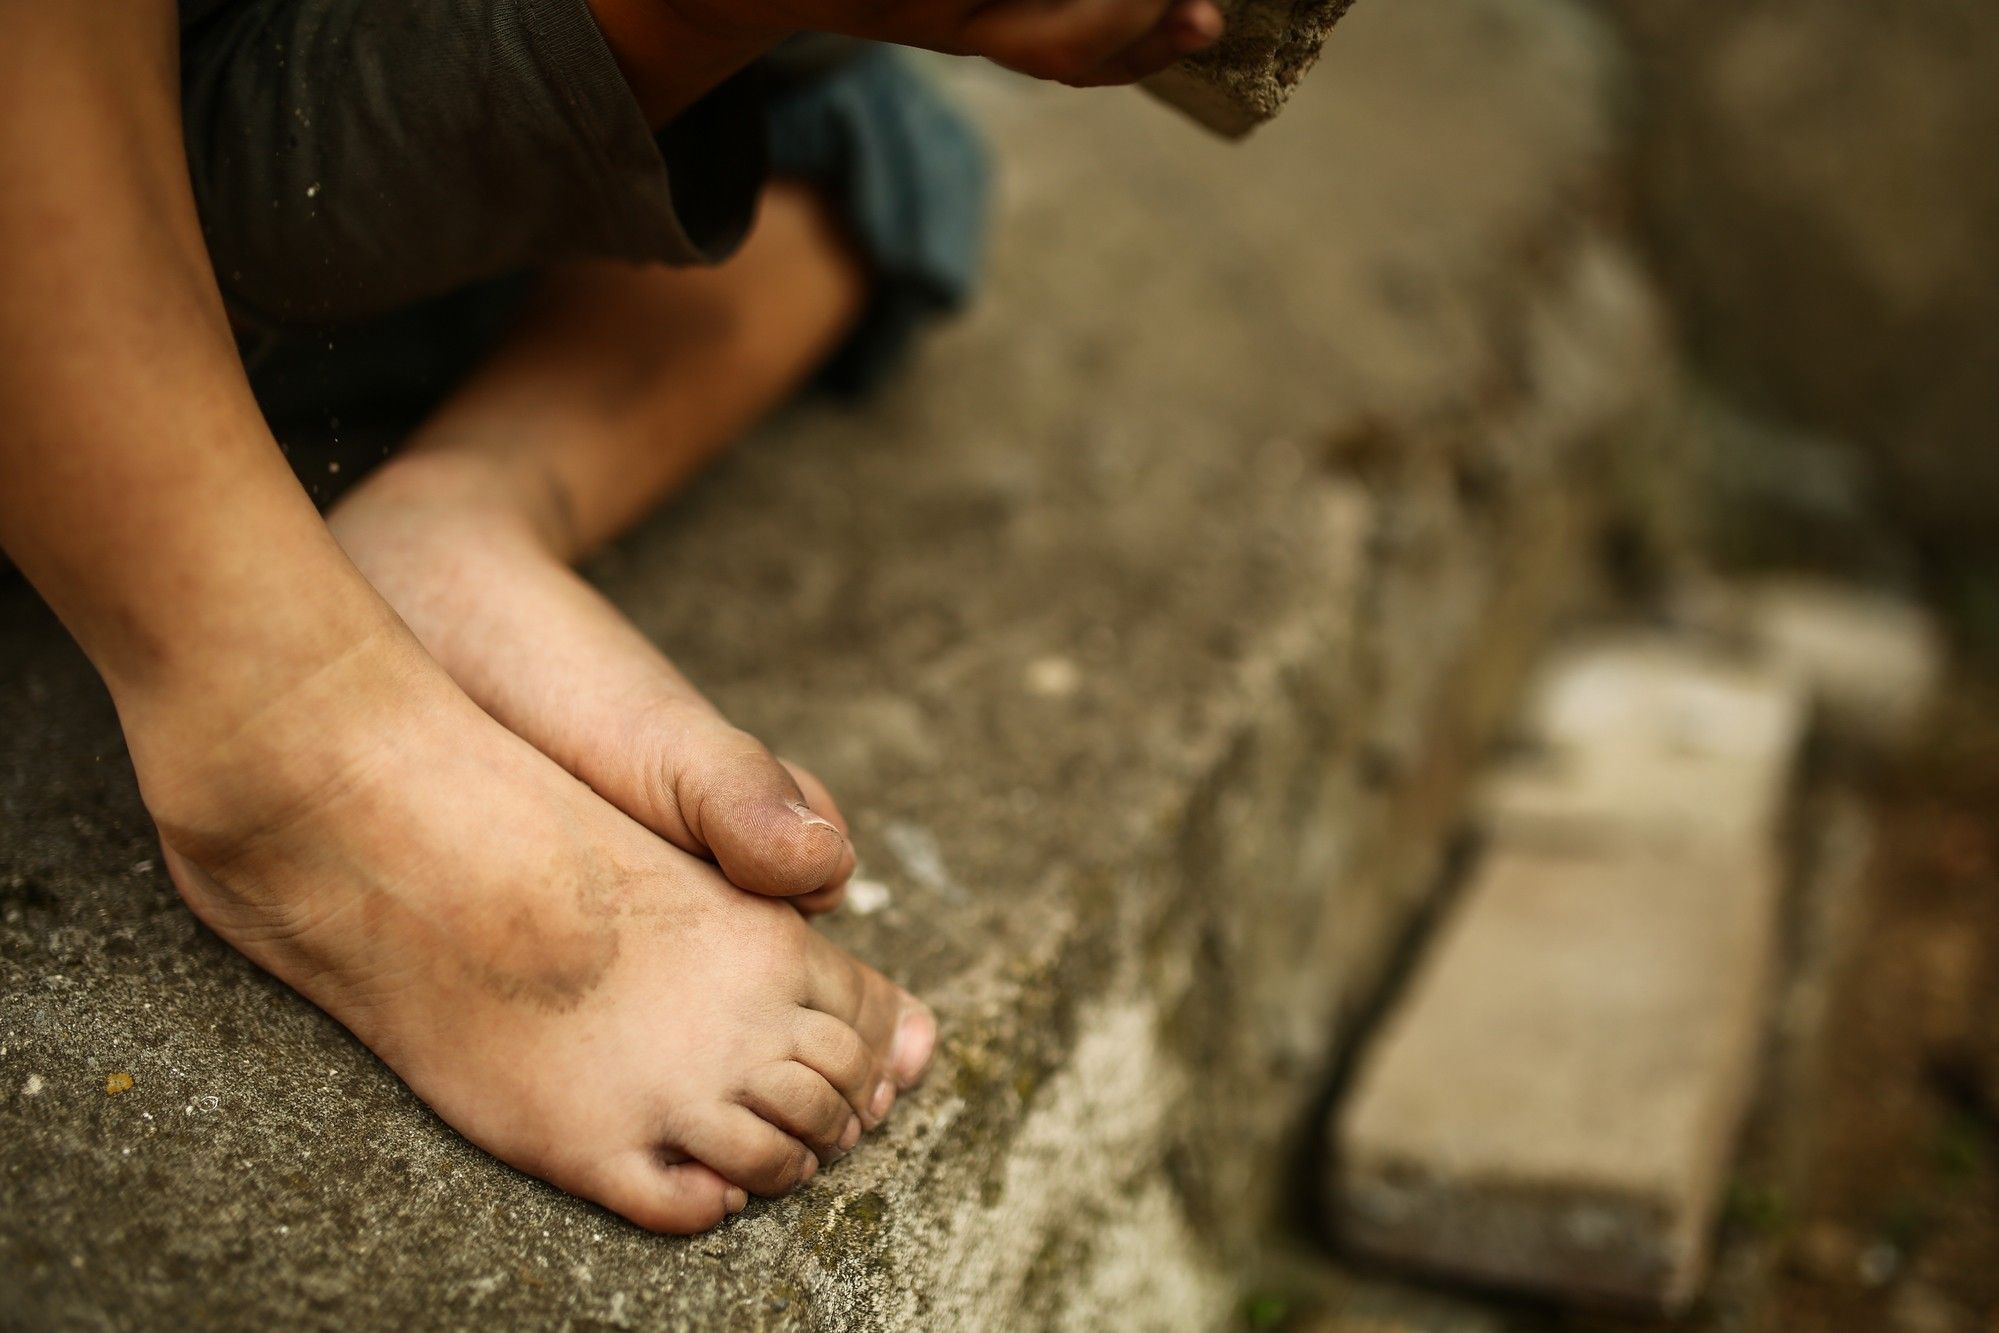 Homeless child's feet regarding the defrauded Indigenous foster children class action settlement